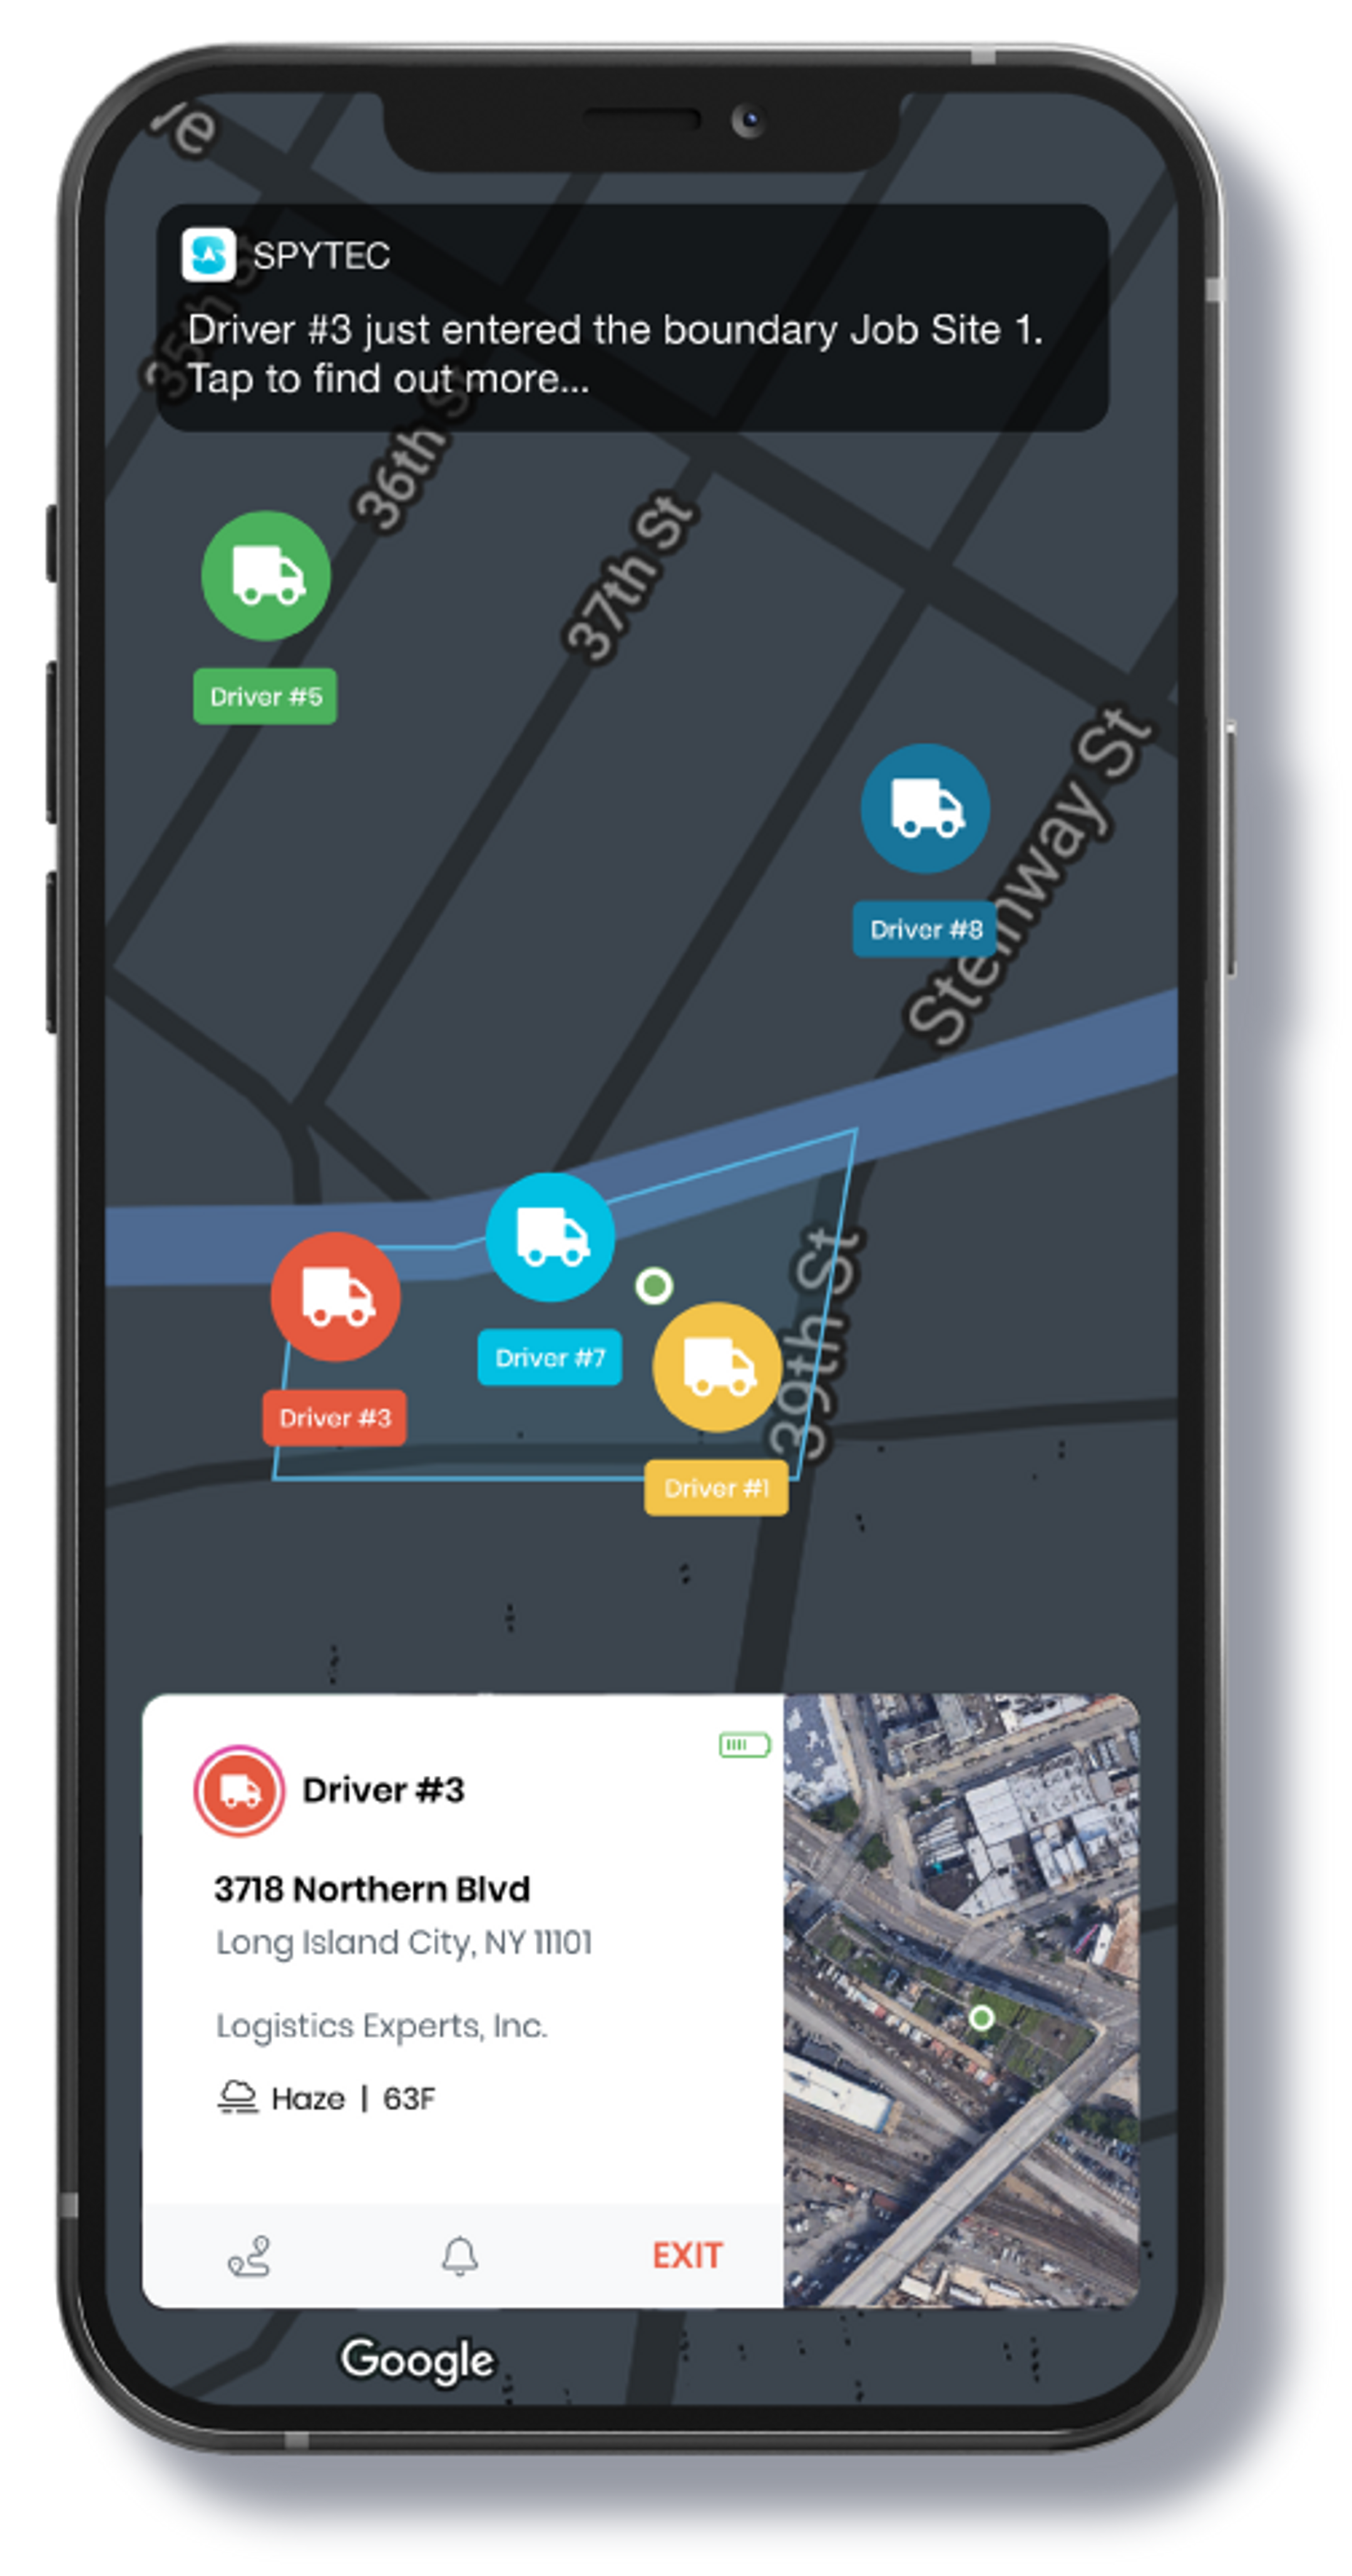 The Spytec GPS Tracking App